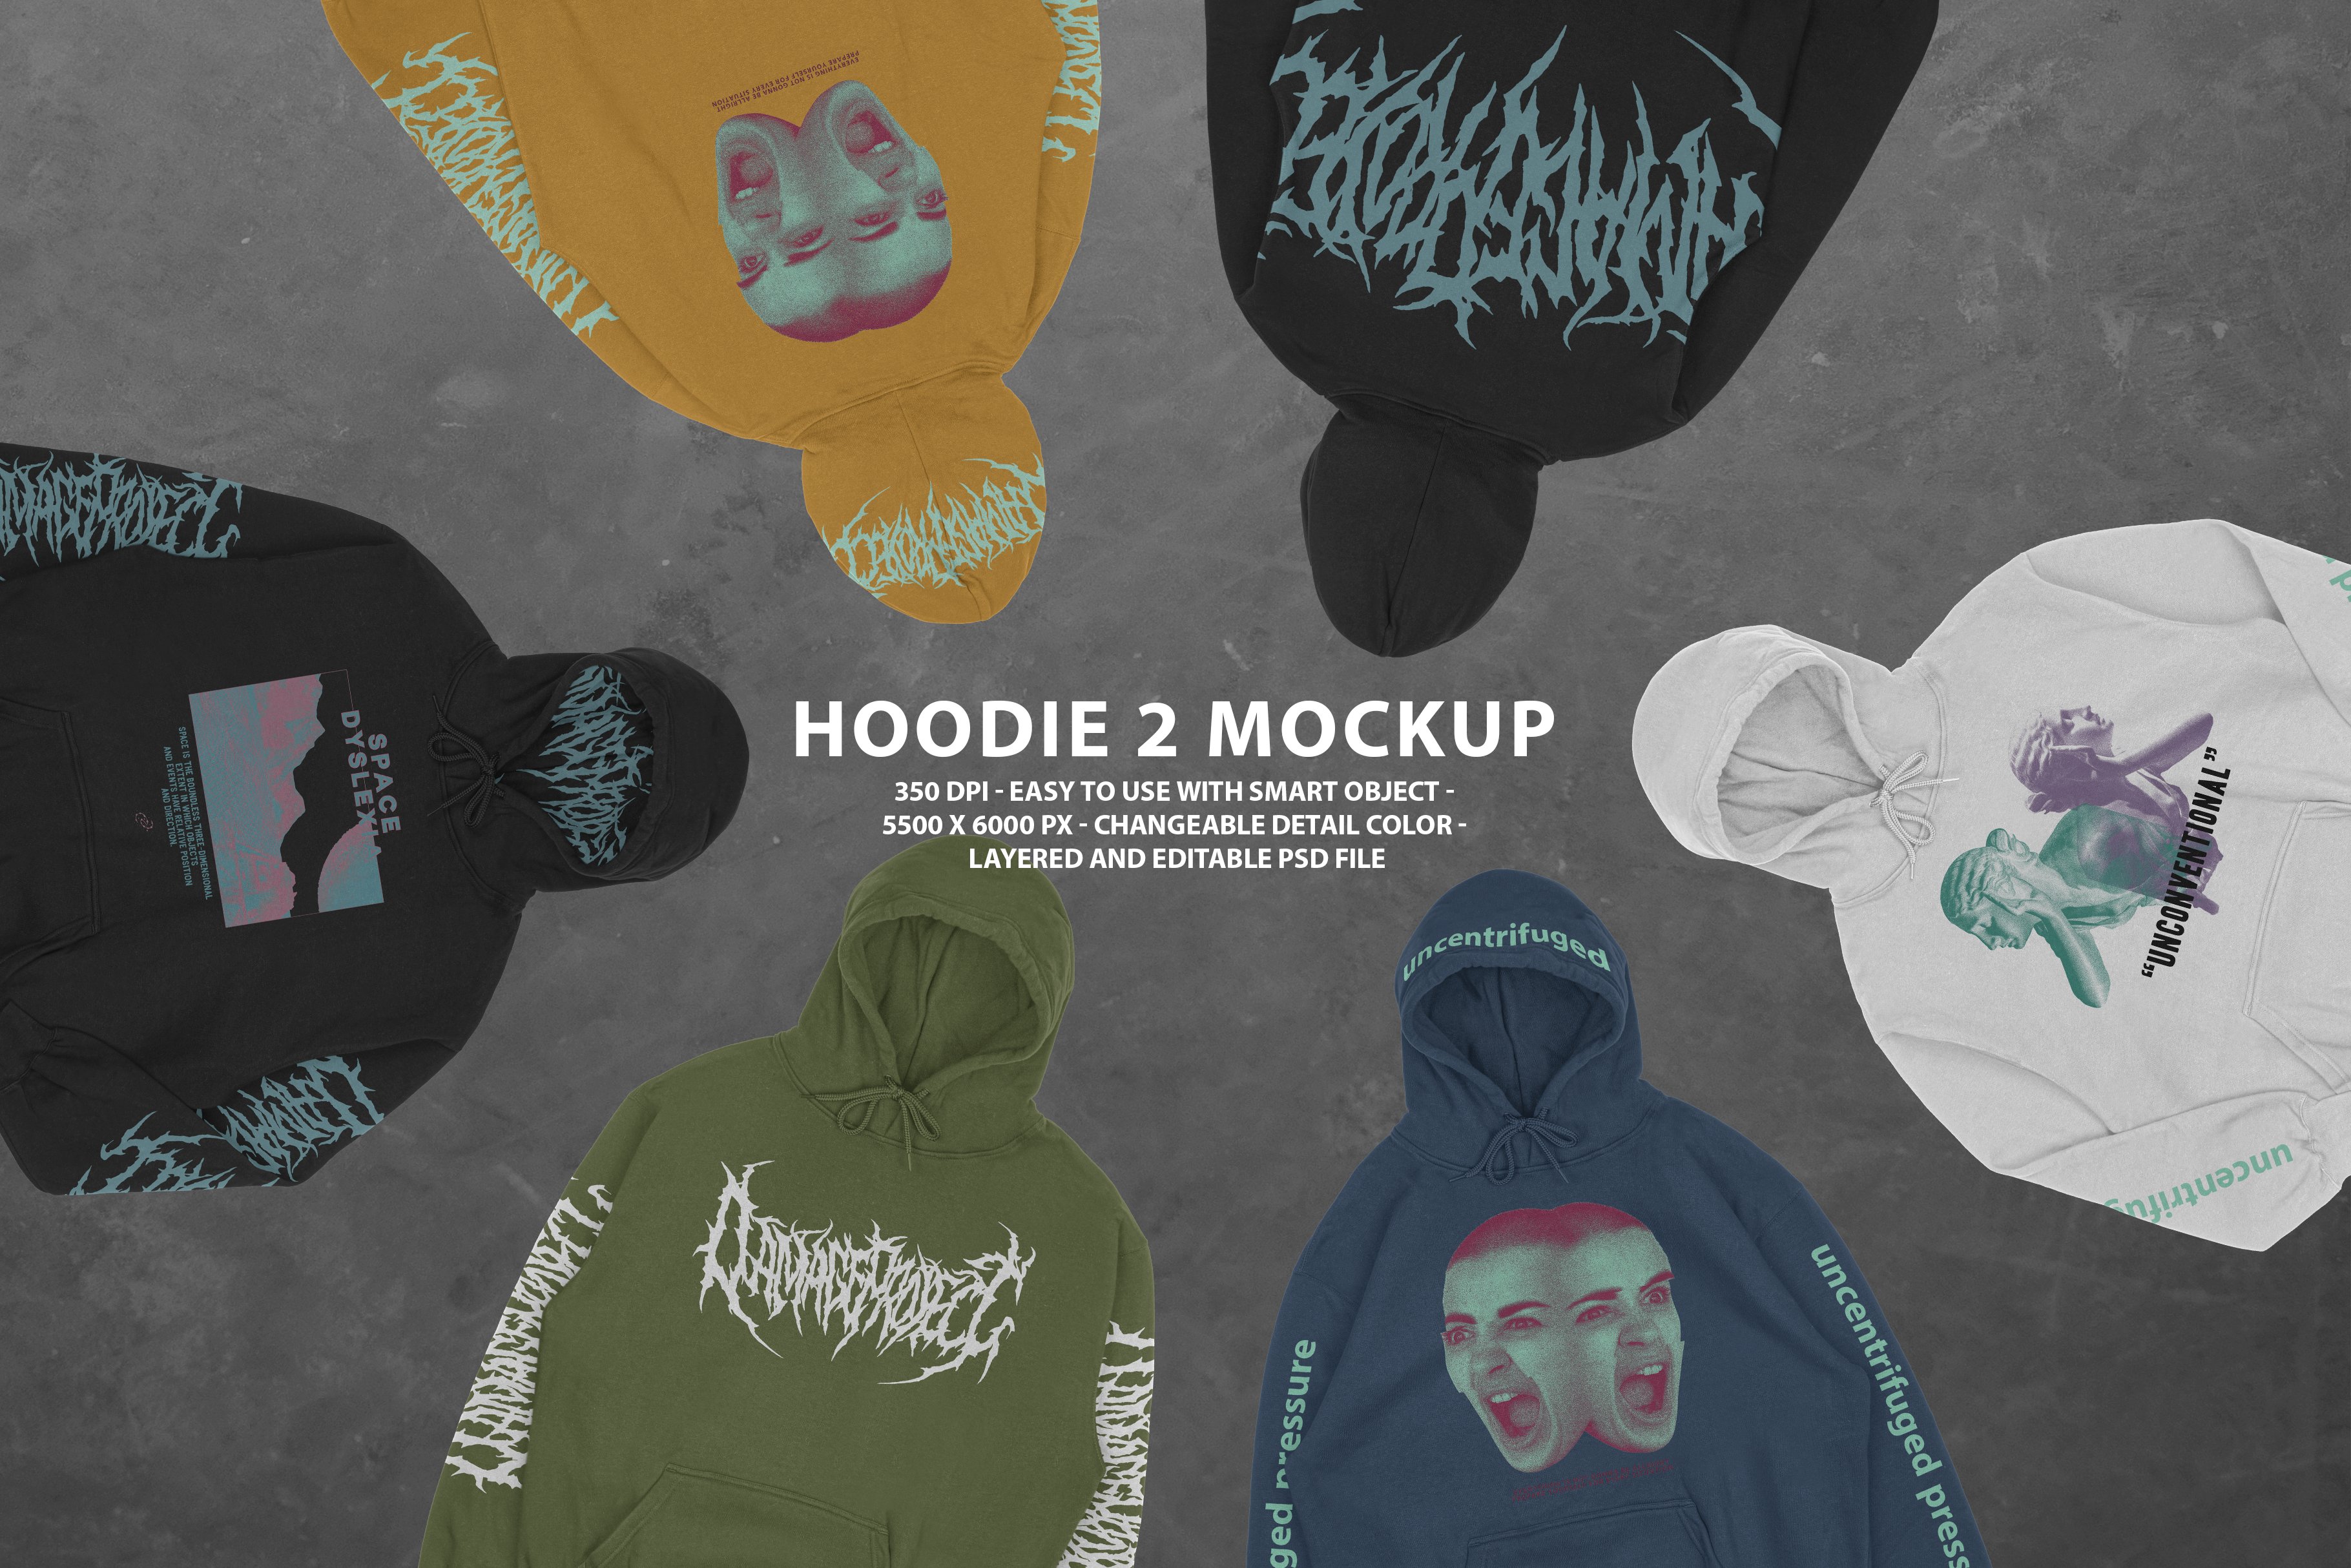 Realistic Hoodie 2 Mockup cover image.